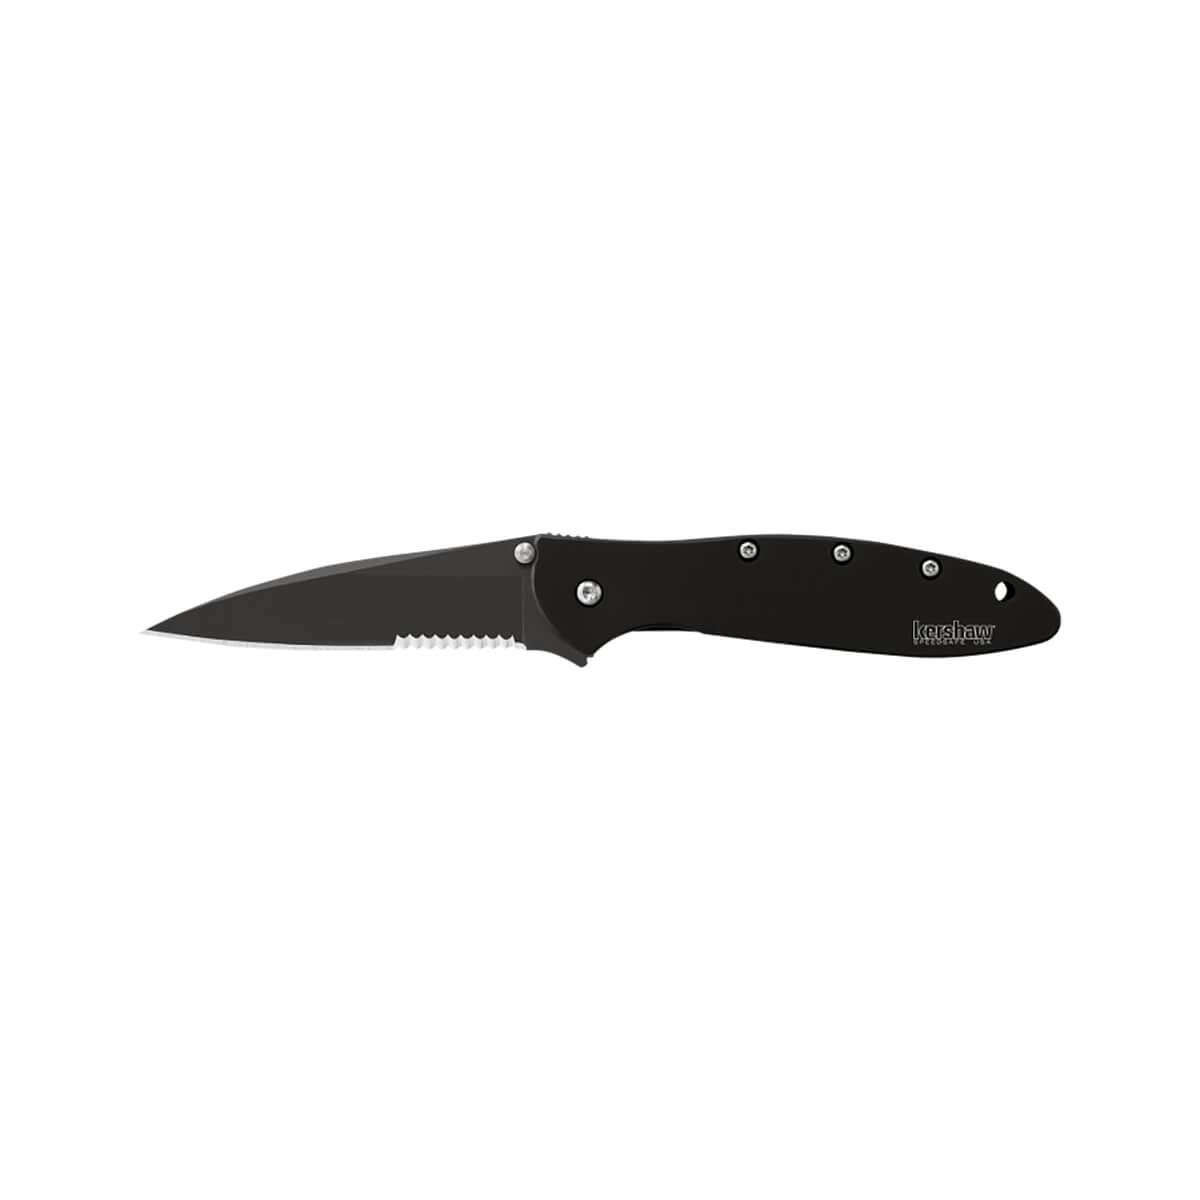  Leek Black/Serrated Knife